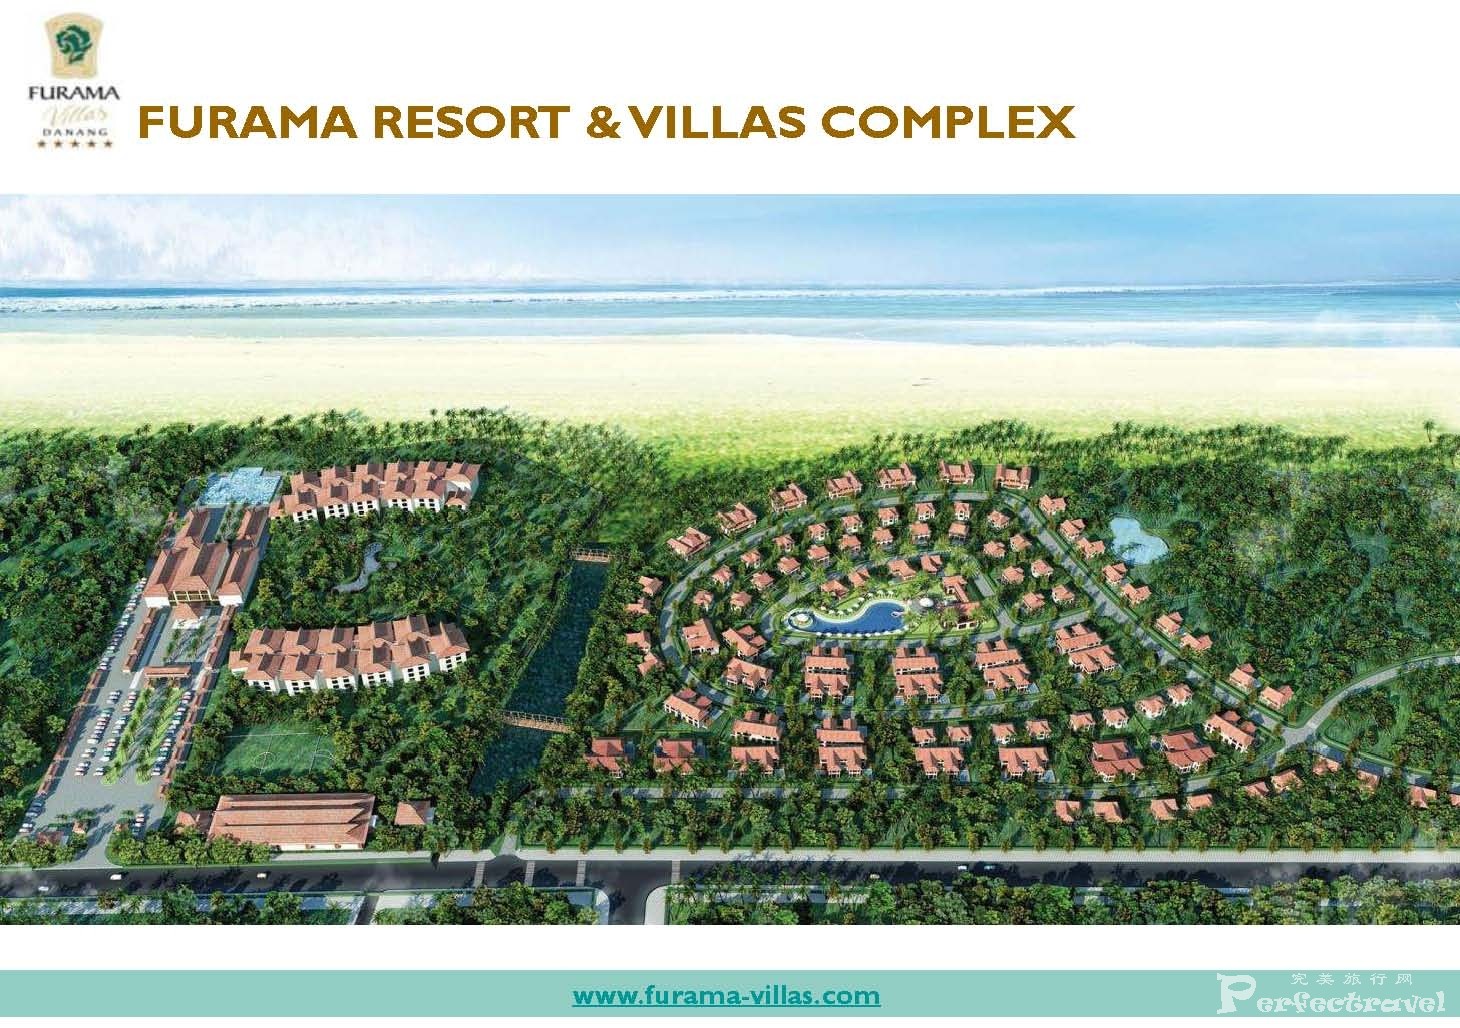 Furama Villas Presentation Fact sheet - updated 07.2015_Page_01.jpg